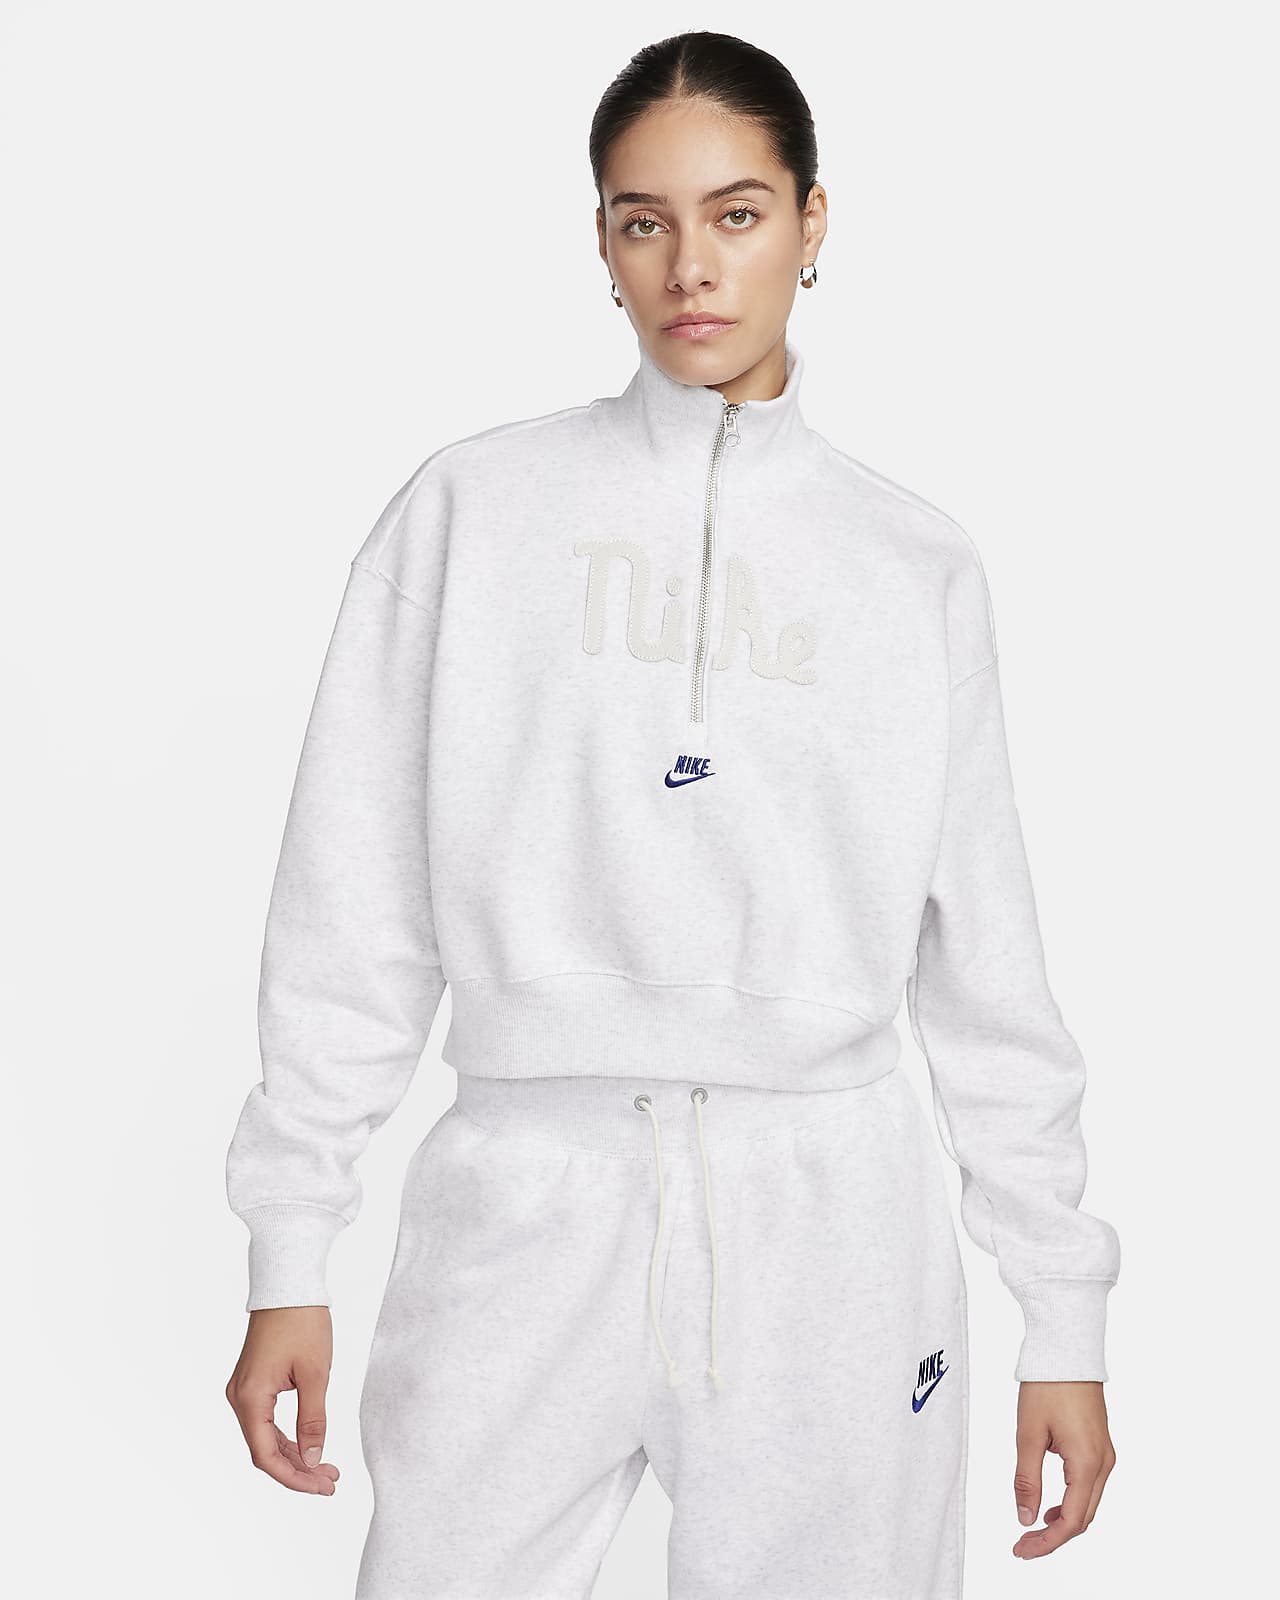 Nike Women's Sportswear Collection Essentials Crew Fleece Crop Sweatshirt,  Oversized